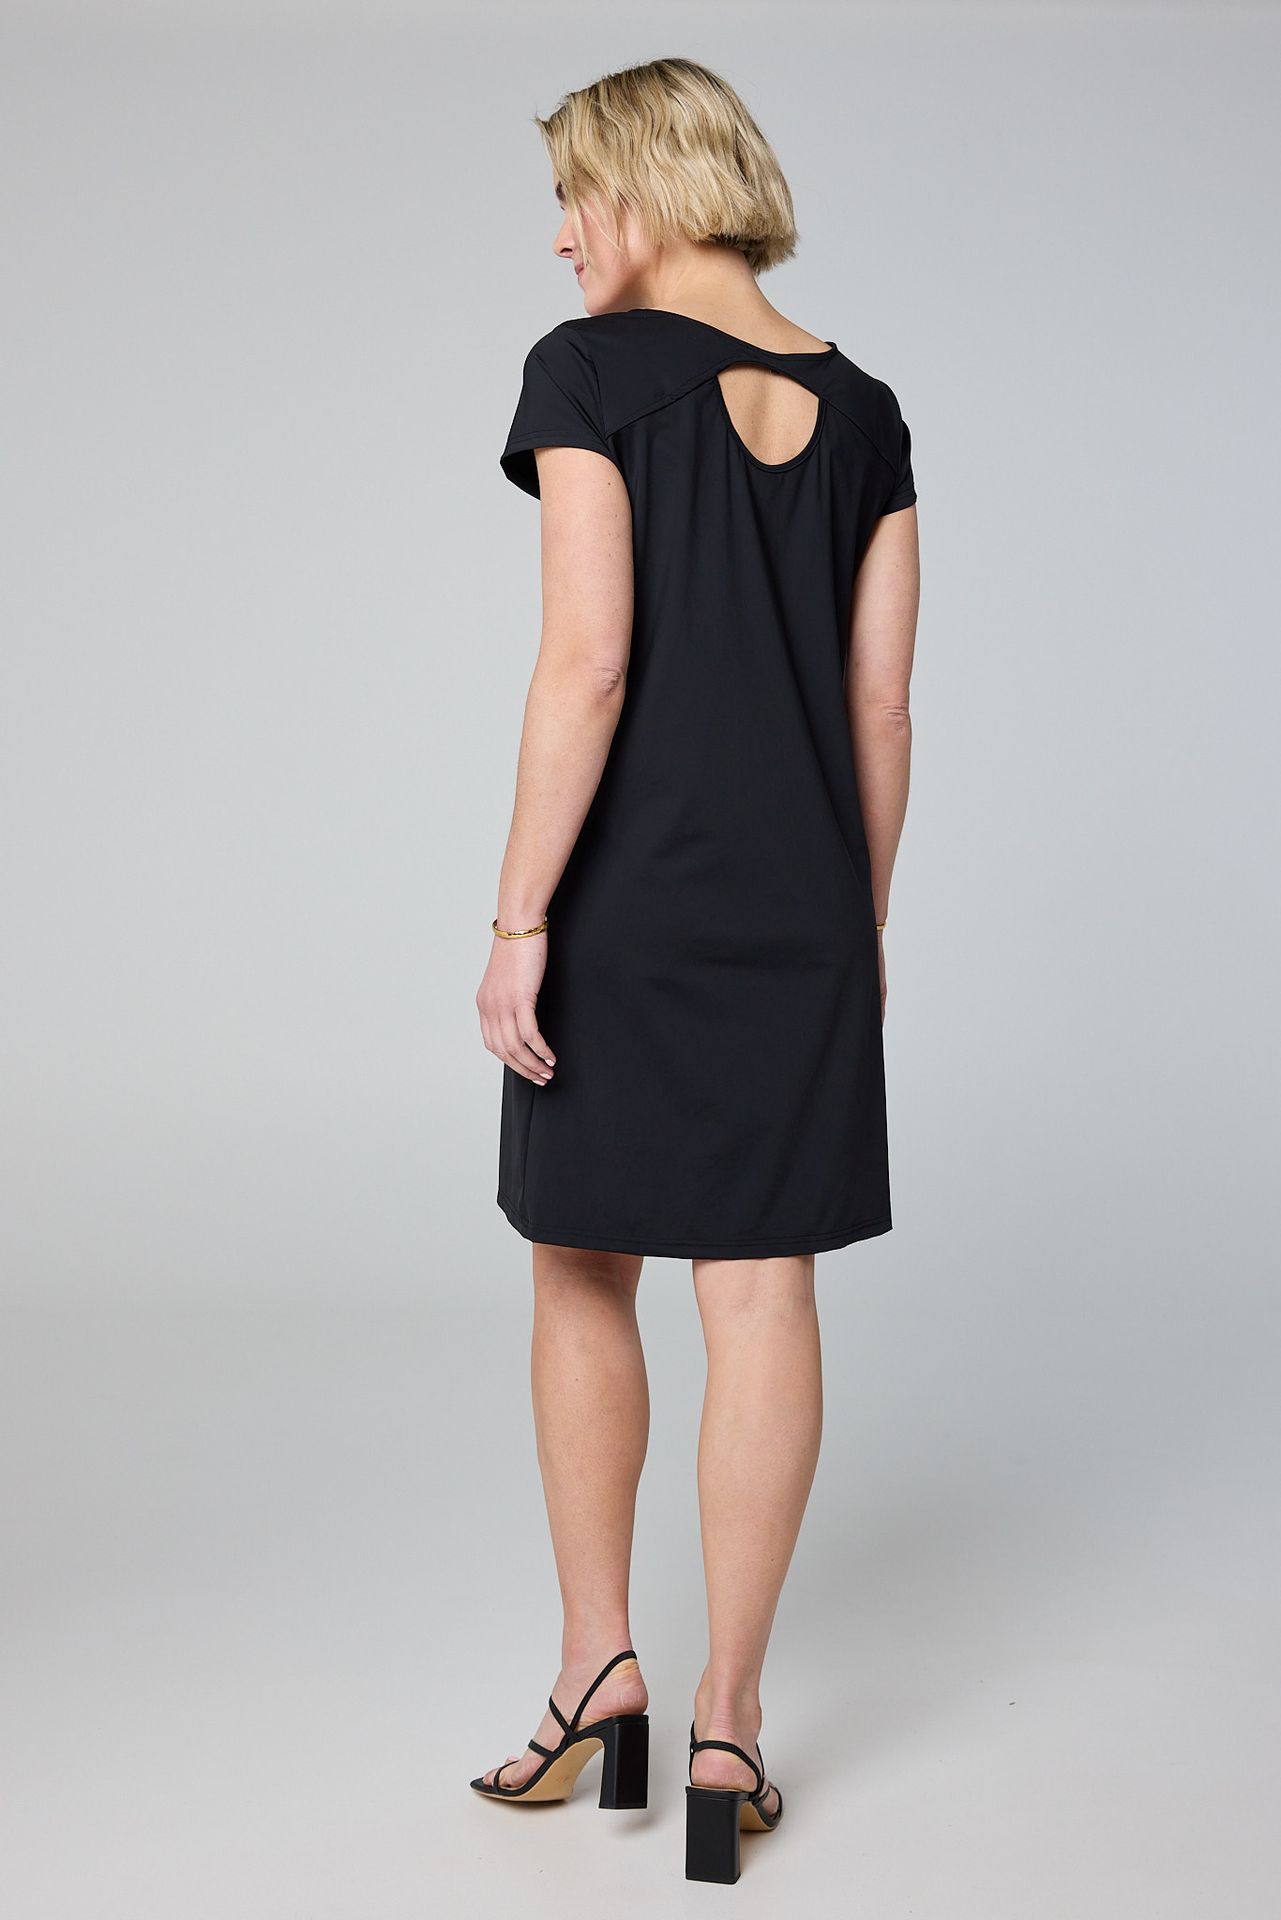 Norah Midi jurk zwart black 213472-001